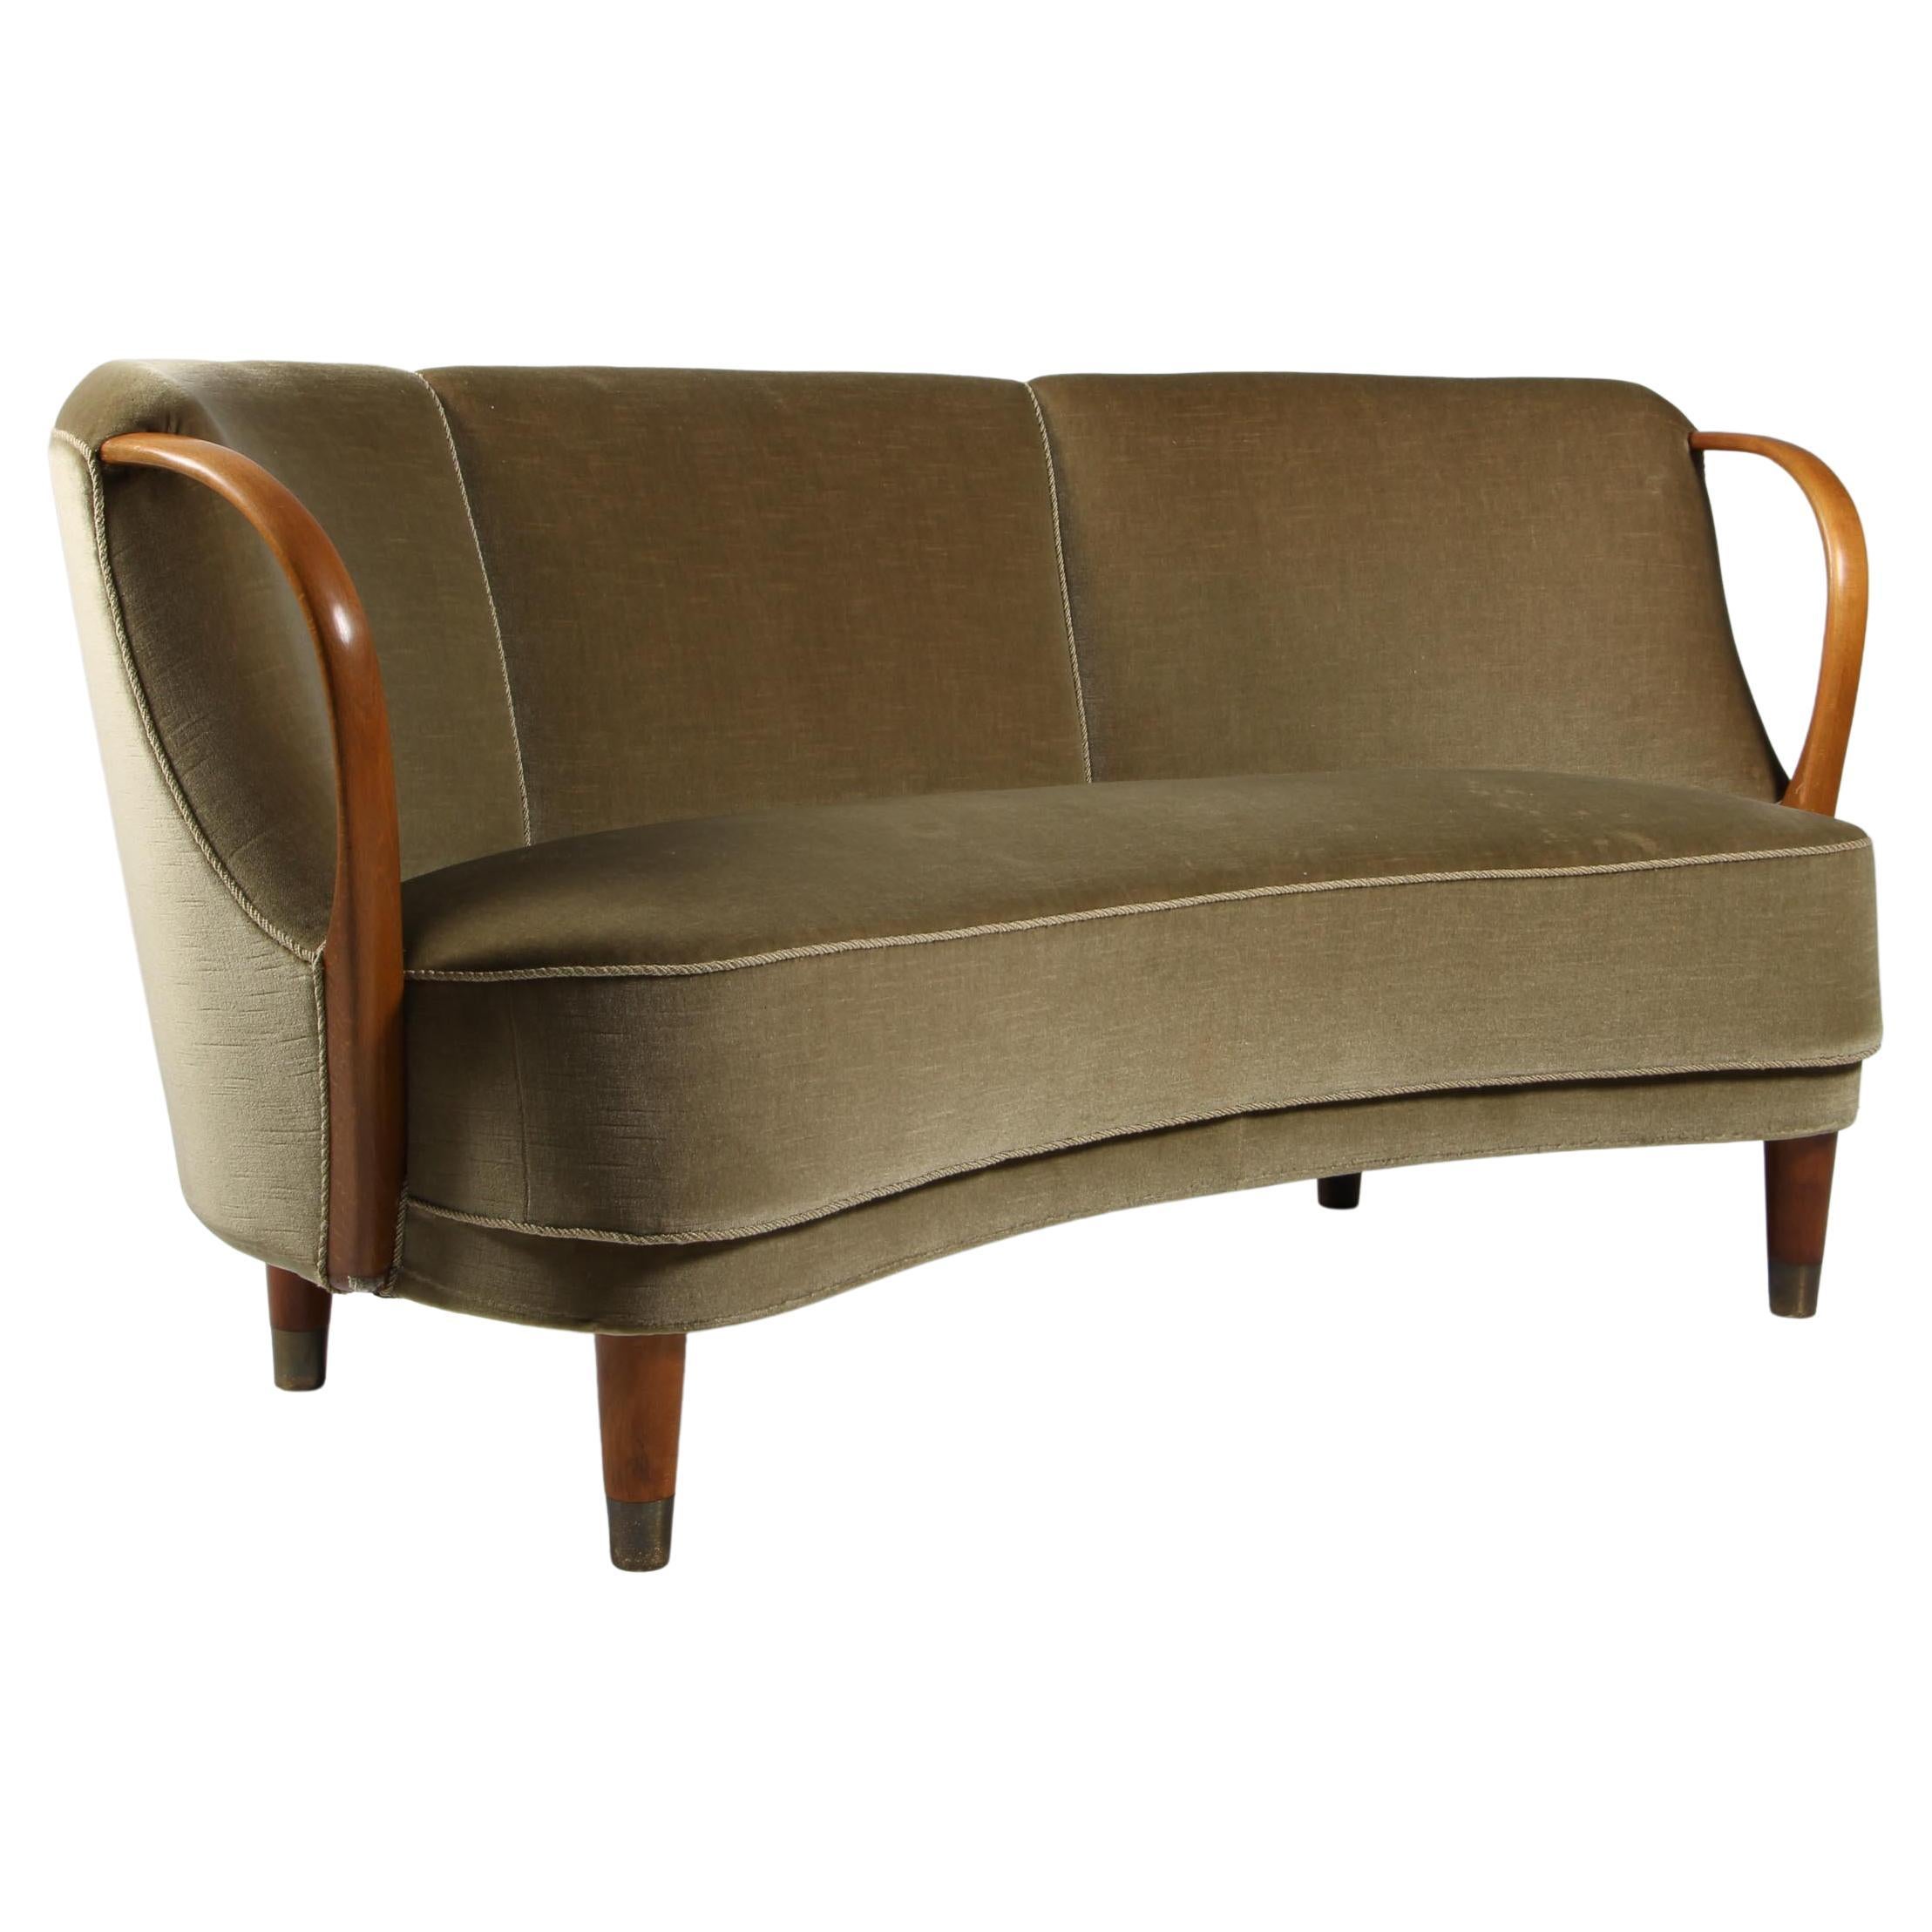 Viggo Boesen Style Curved Sofa Model No. 96 in Velvet by N.a. Jørgensen